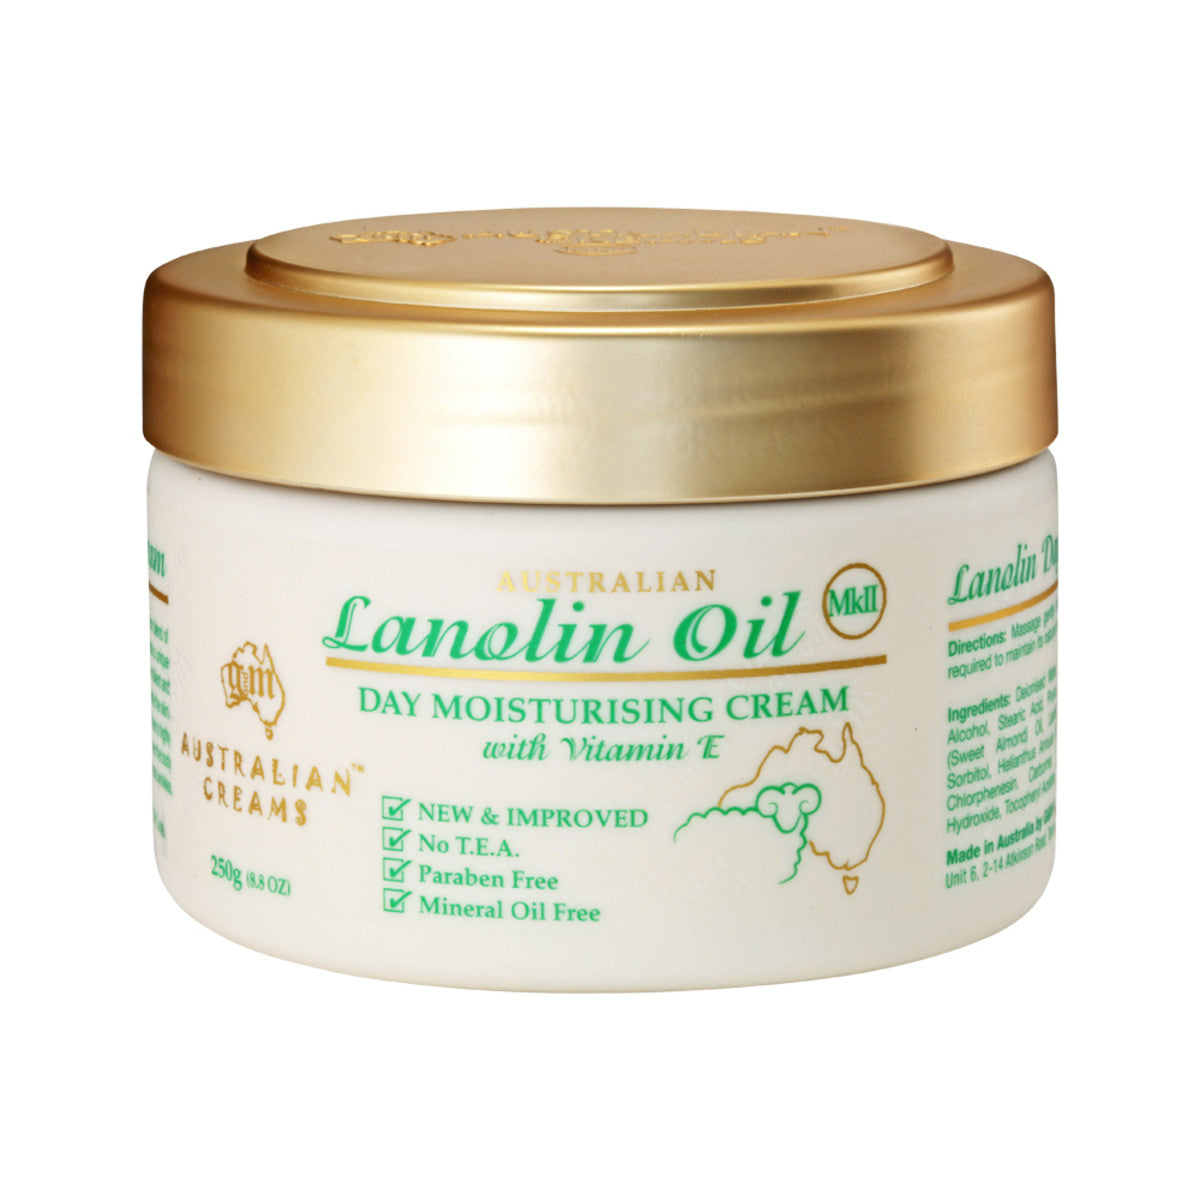 Australian Creams - MkII Cream Lanolin Oil Day